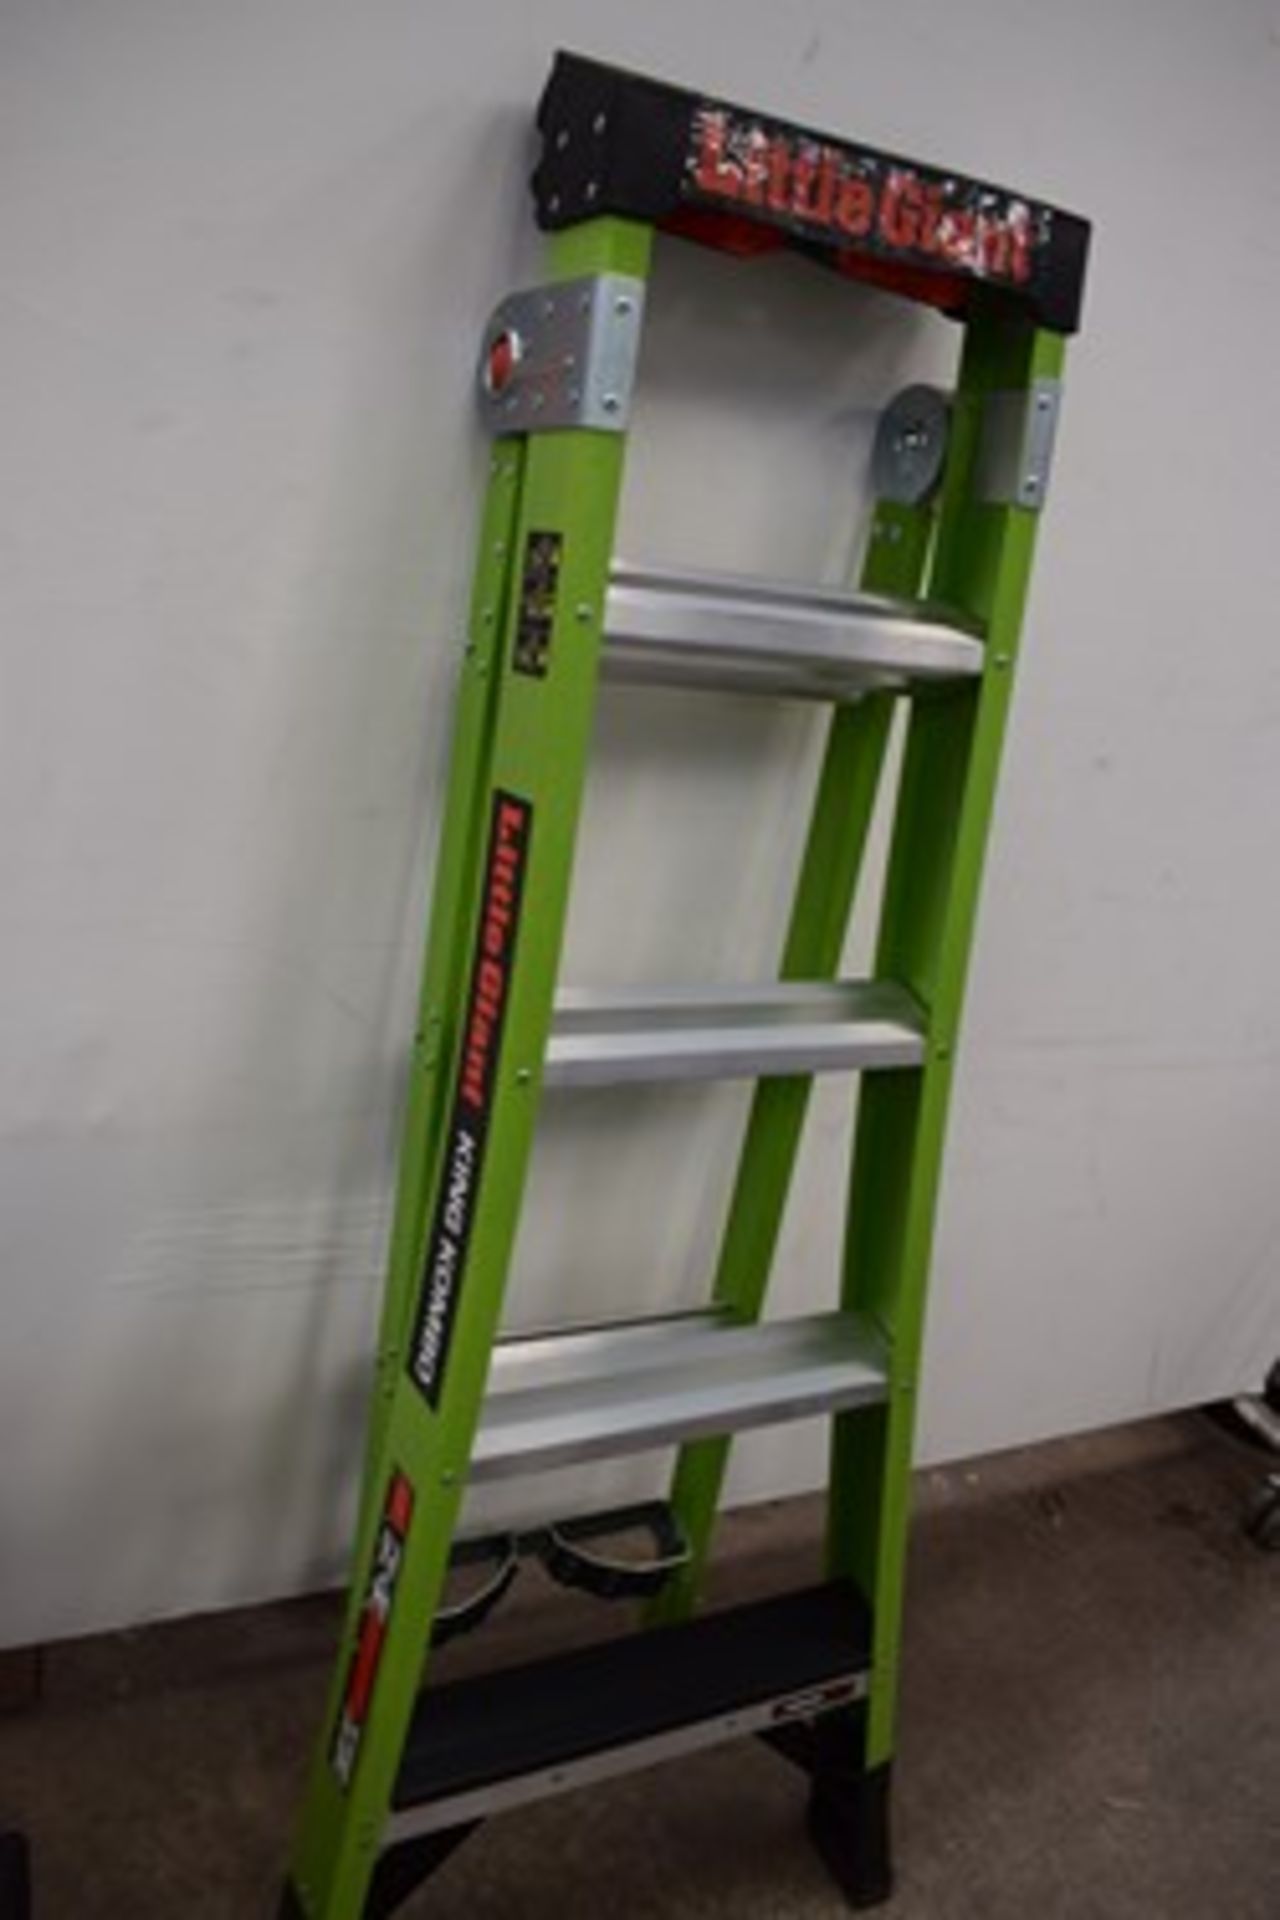 1 x Little Giant King Kombo industrial 5 tread fibreglass ladder, SKU:- 1303-205, EAN 506035691295